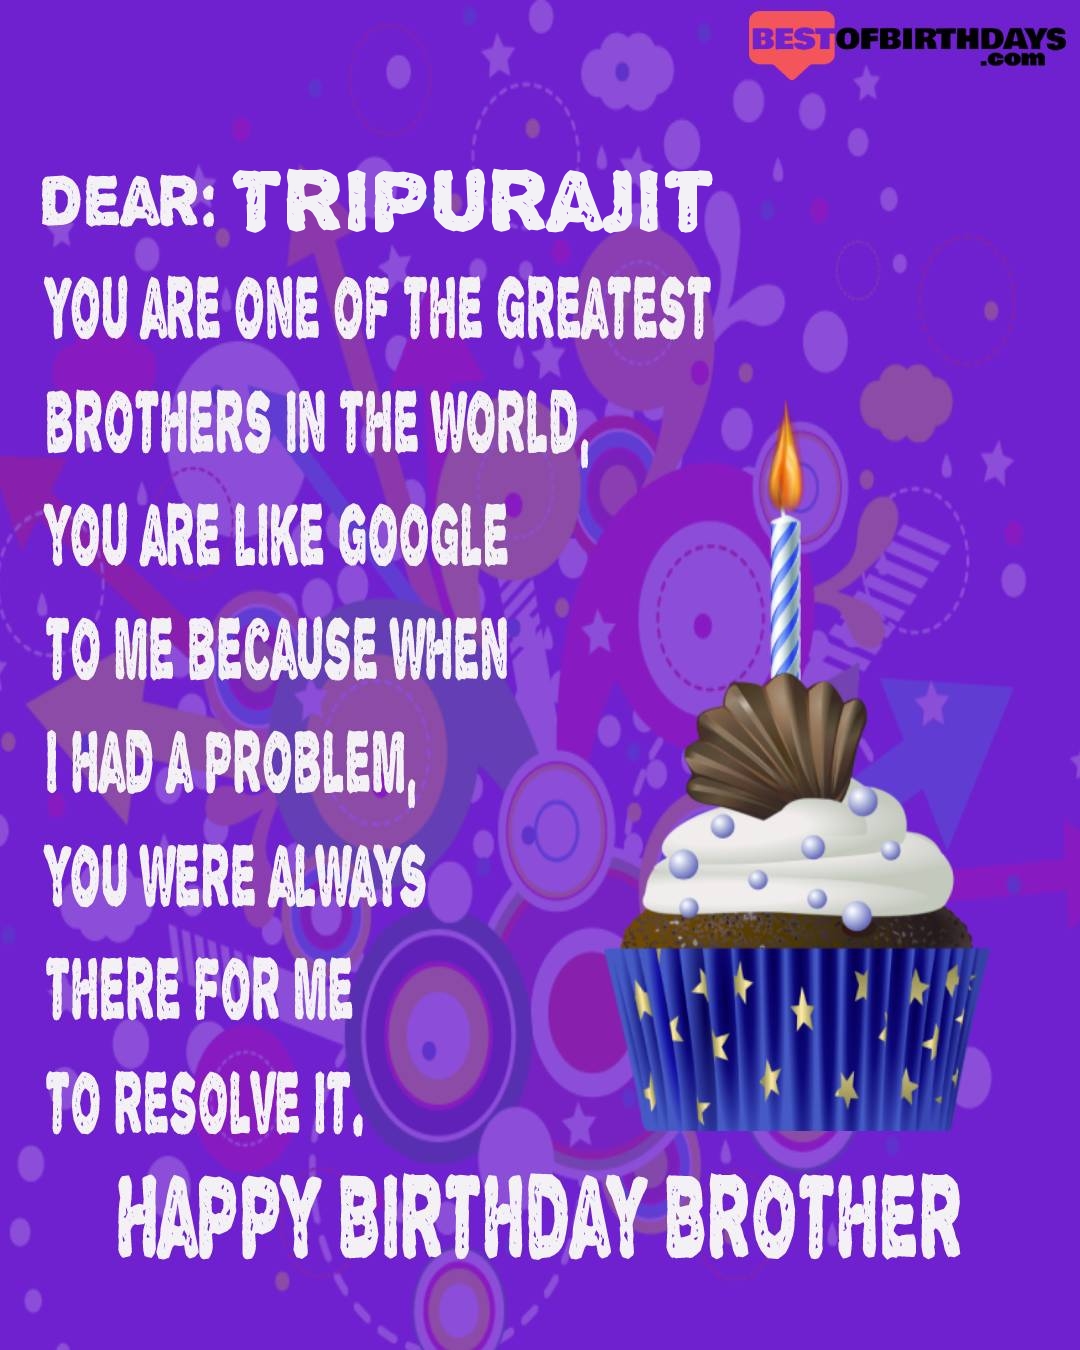 Happy birthday tripurajit bhai brother bro